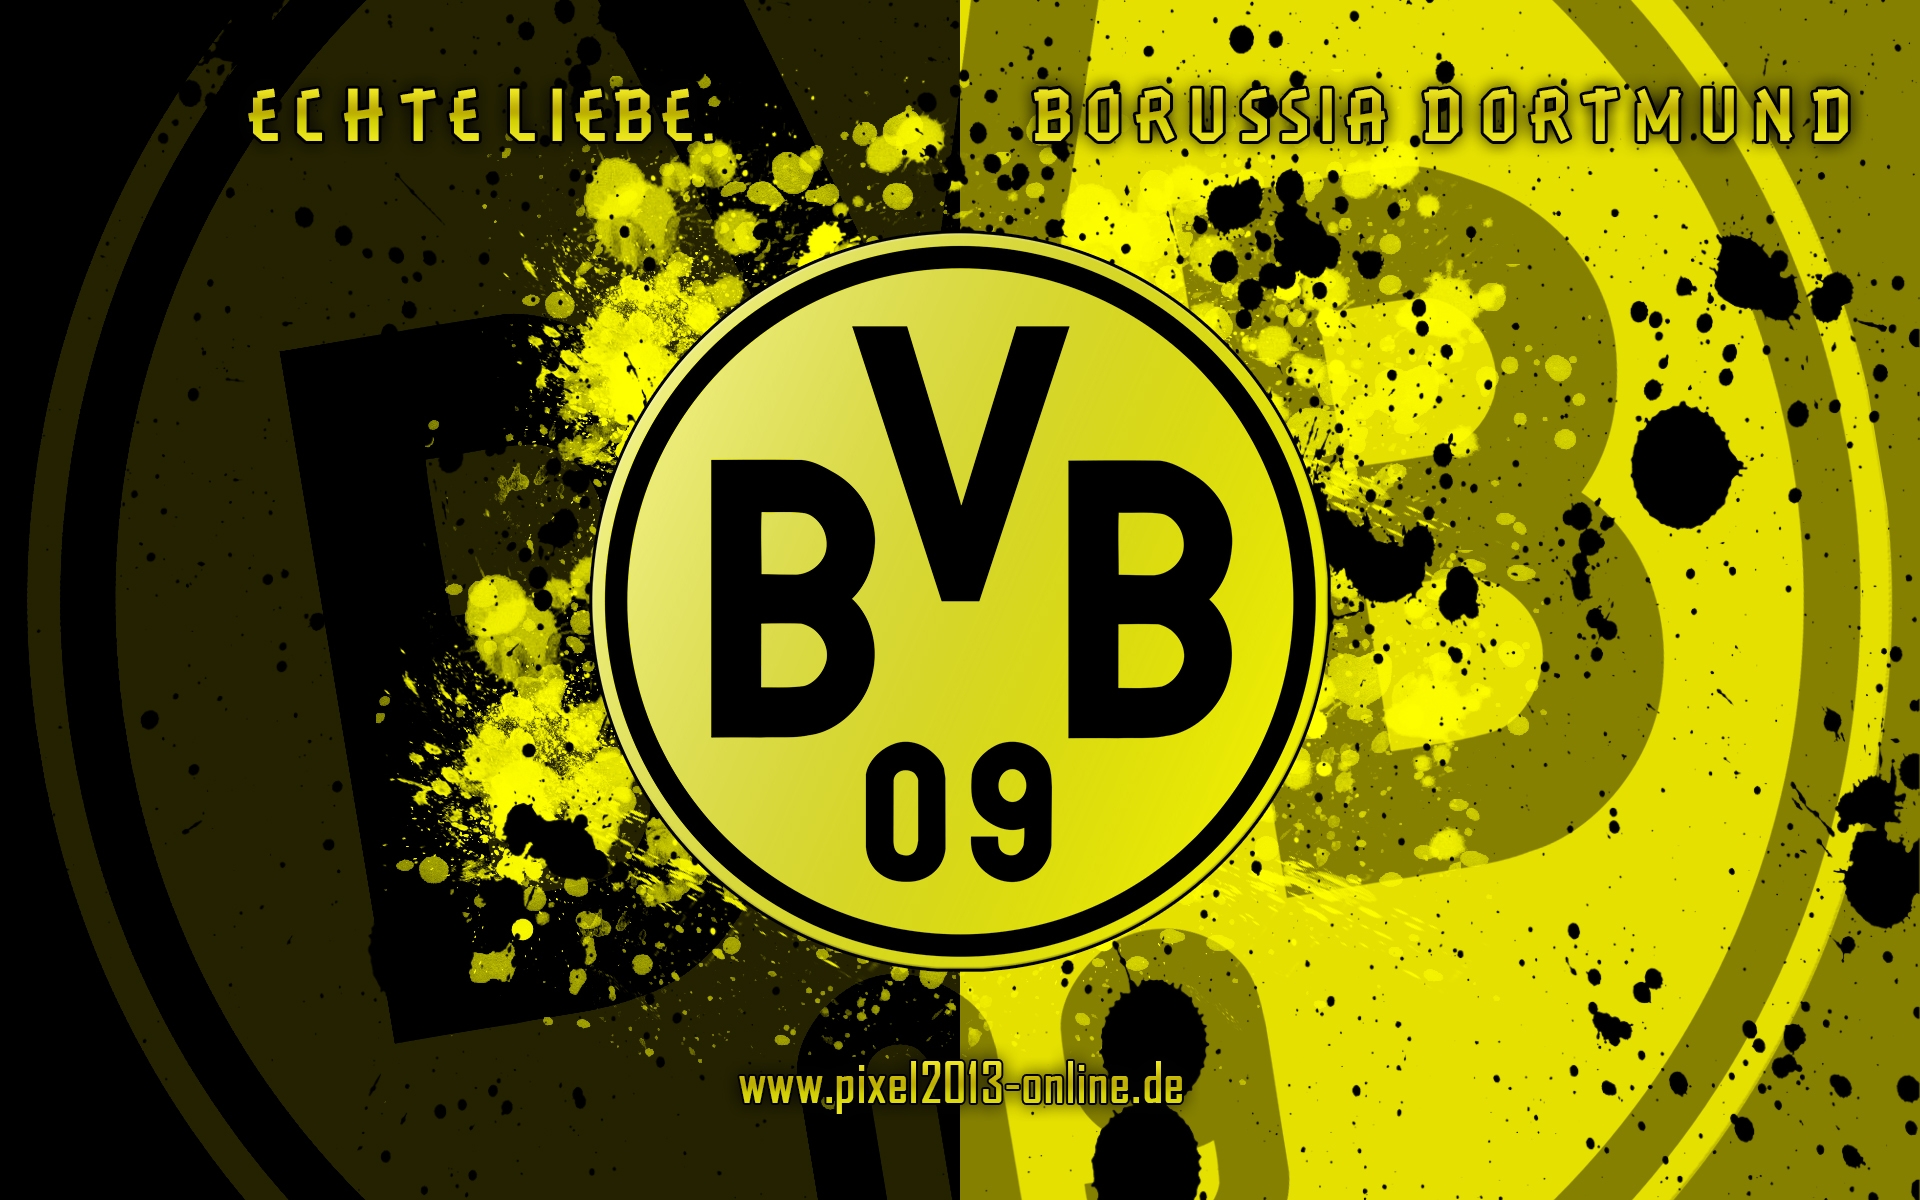 Mobile Phone Borussia Dortmund Wallpaper